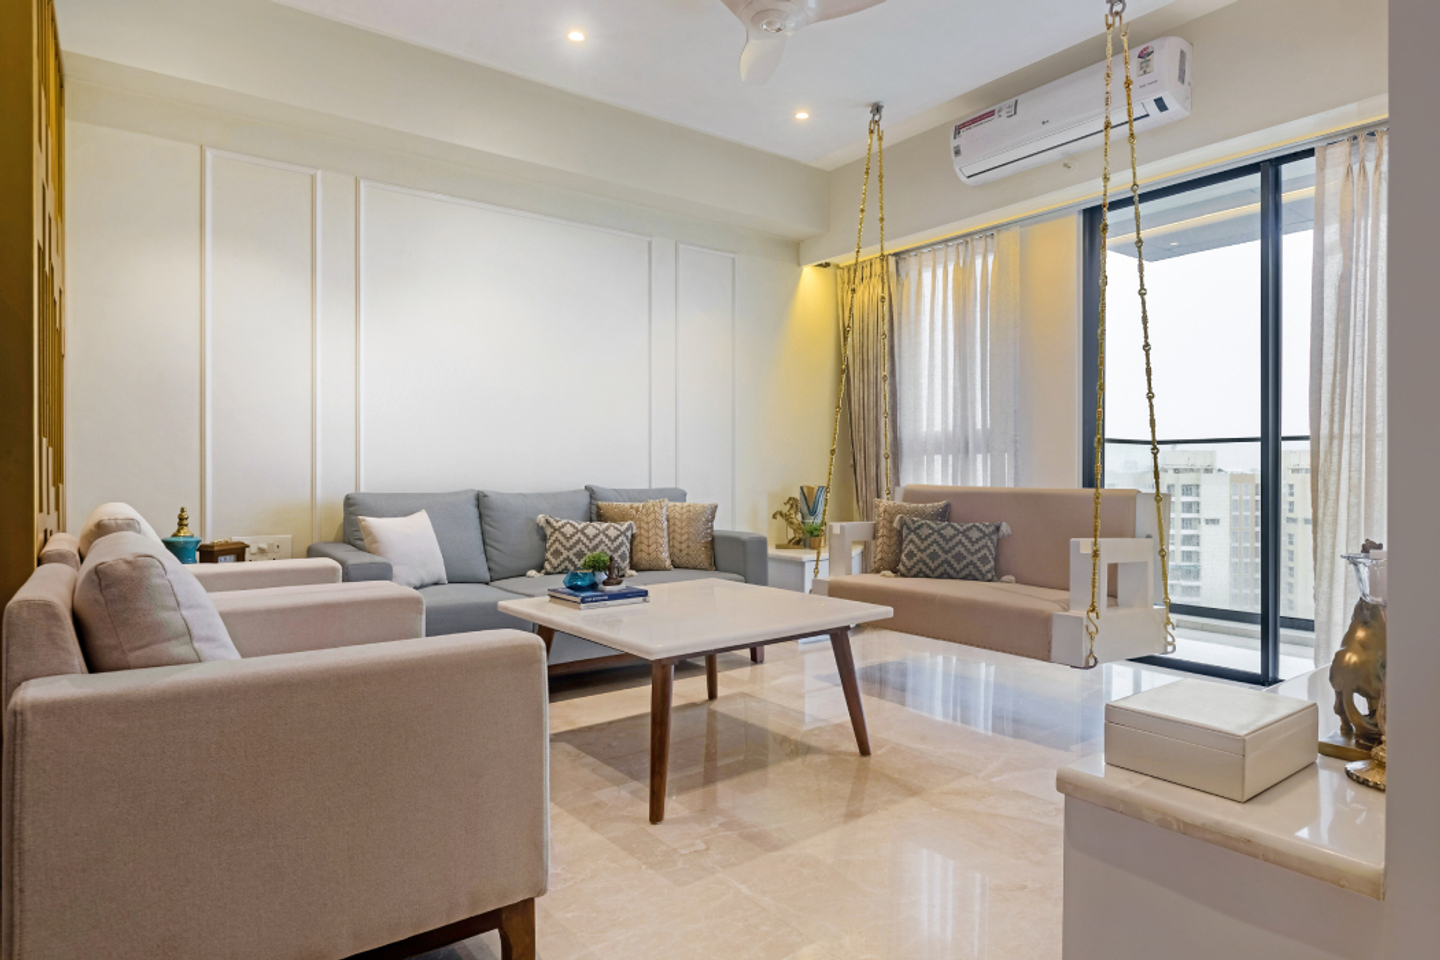 White And Grey Contemporary Living Room Design